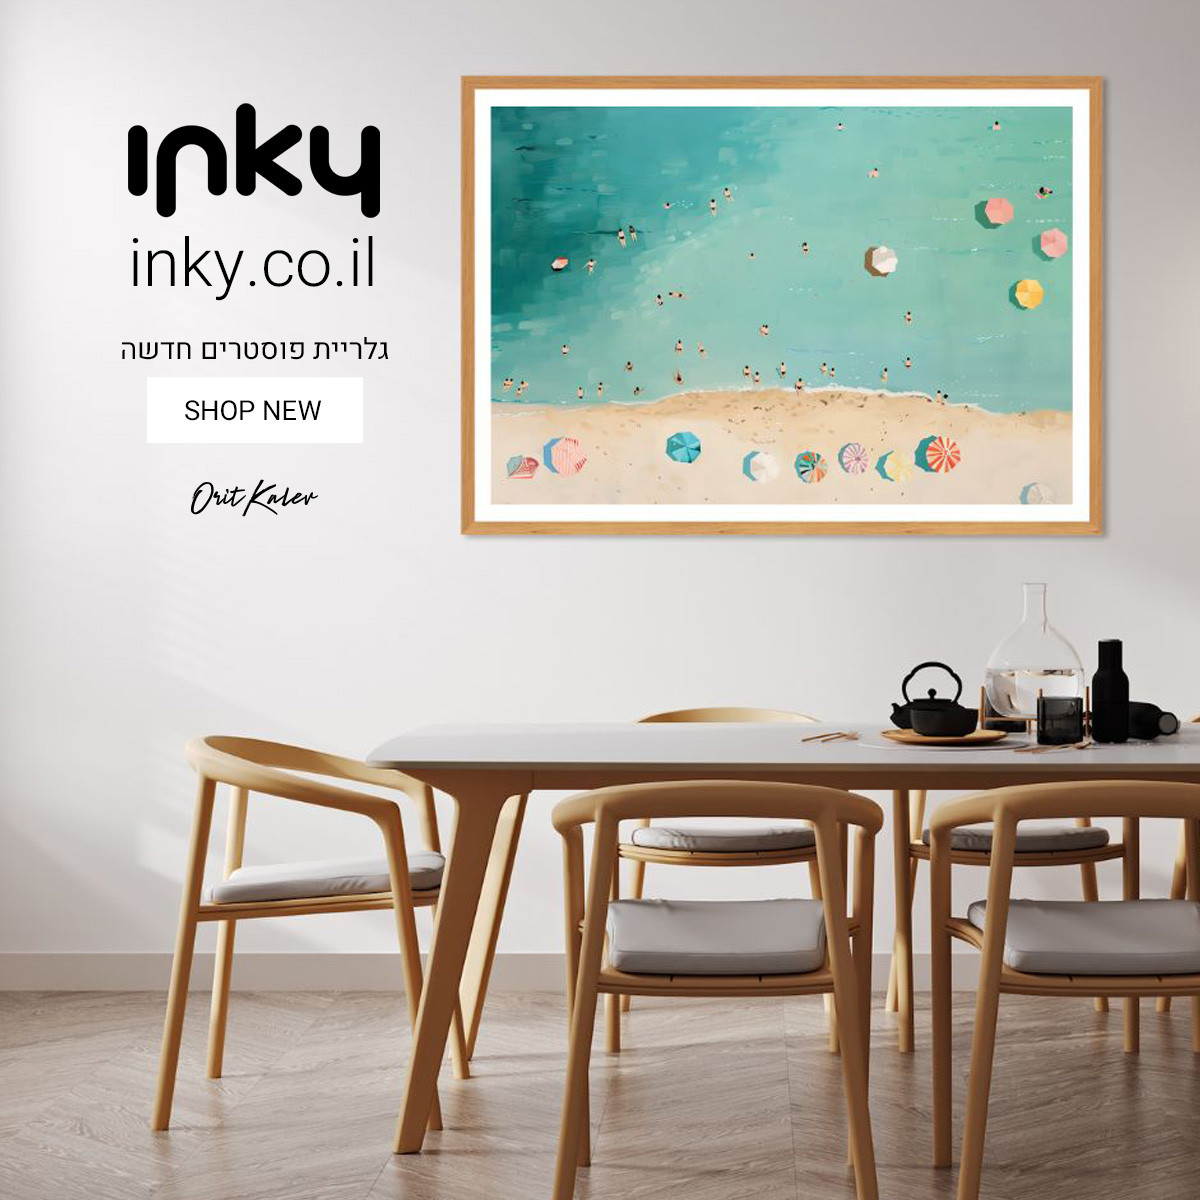 inky.co.il